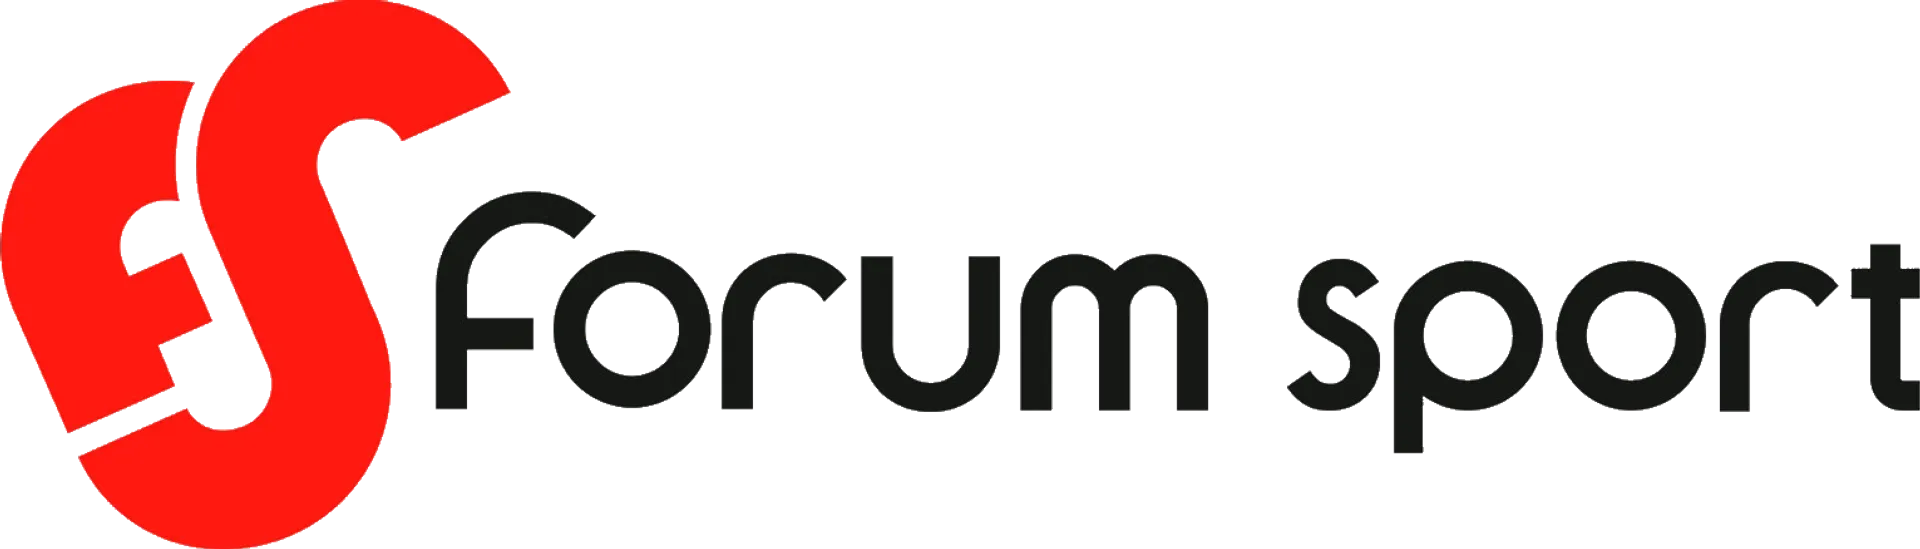 FORUM SPORT logo